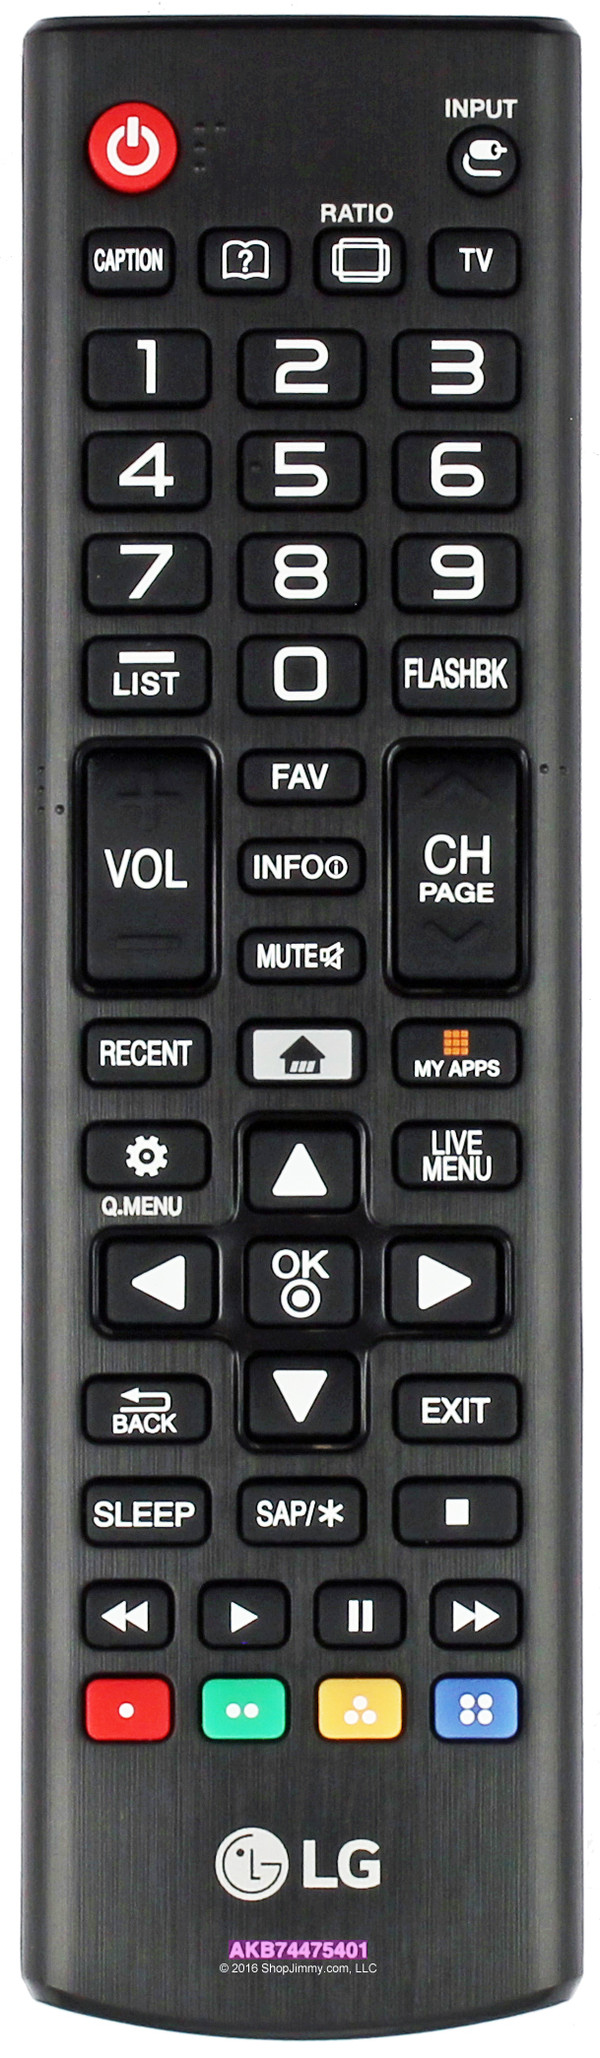 LG AKB74475401 Remote Control-Open Bag